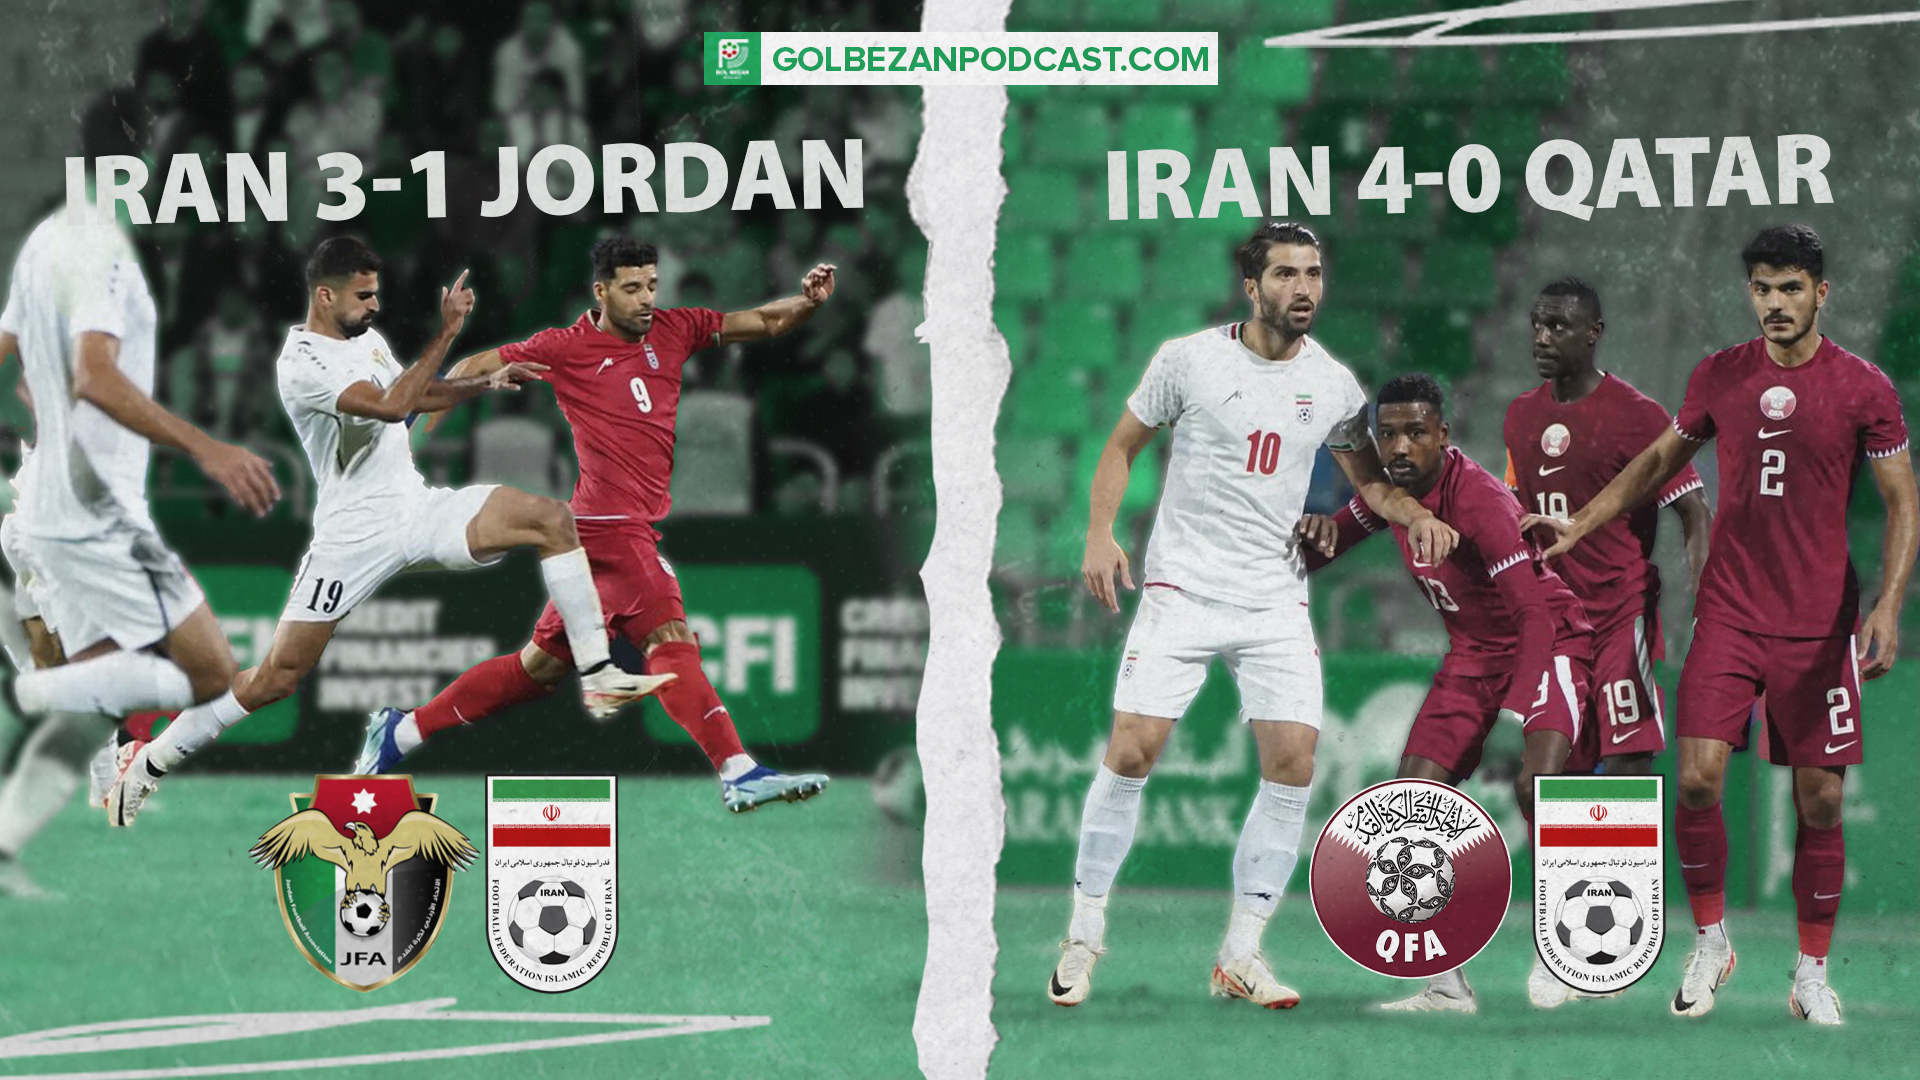 Analysis: Iran 3 - 1 Jordan | Iran 4 - 0 Qatar